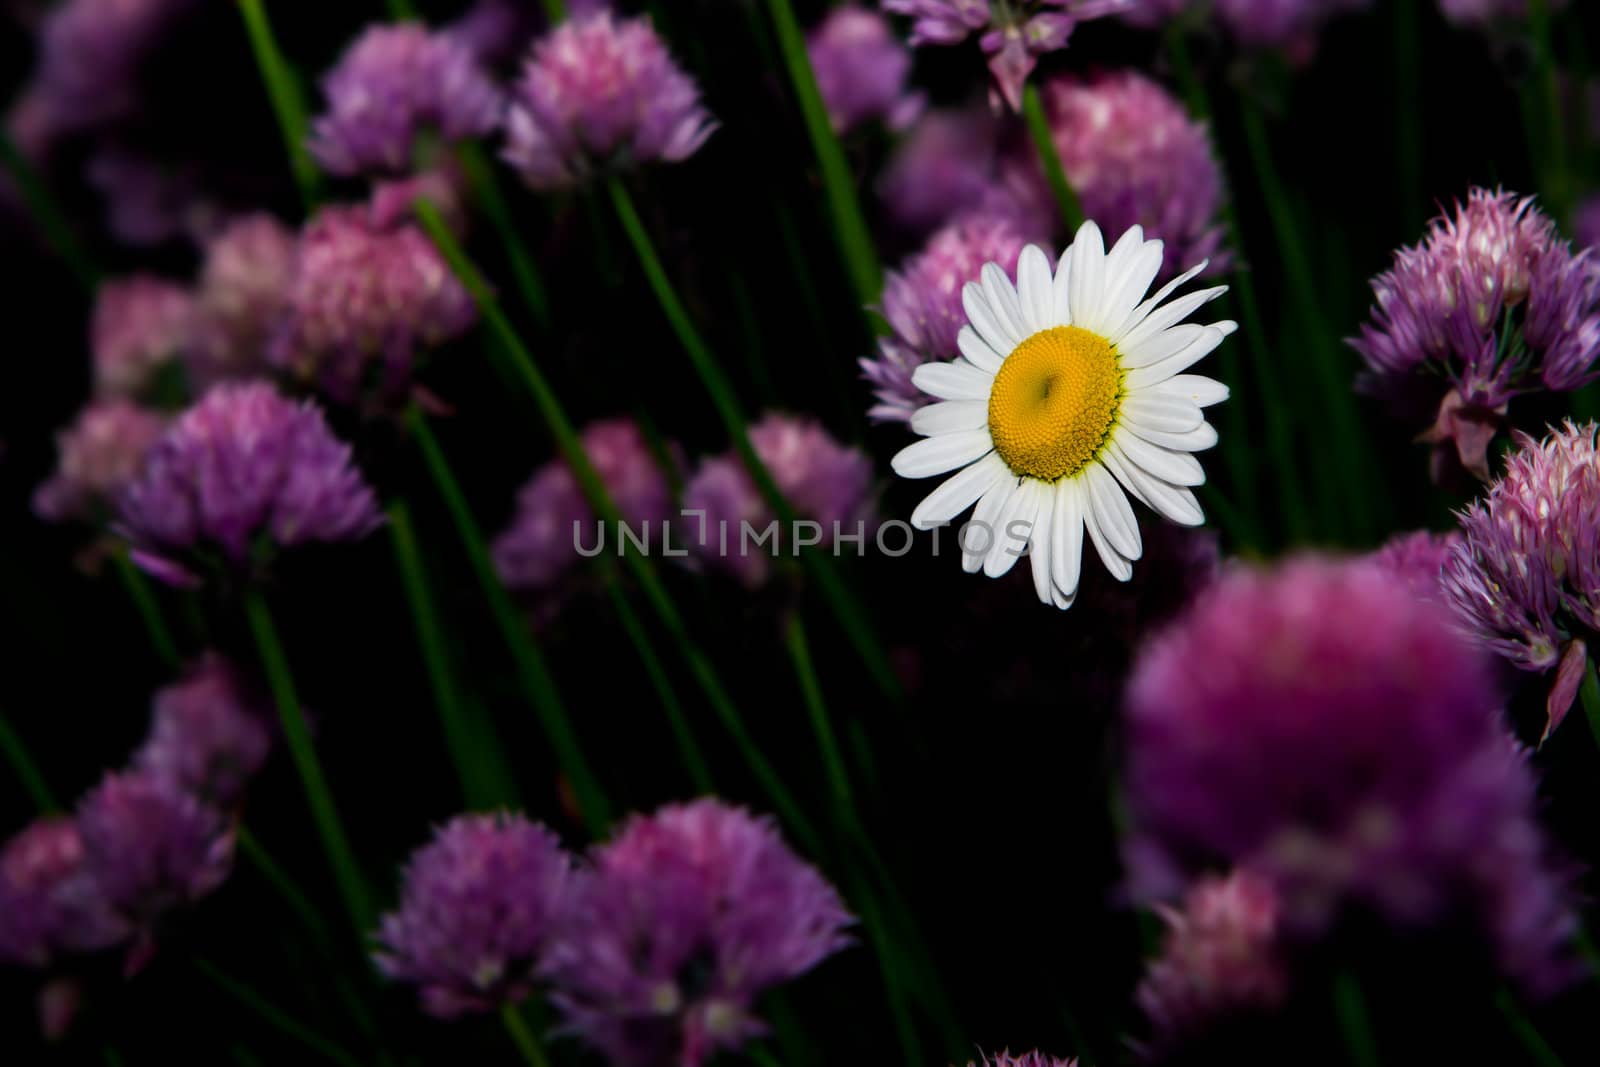 Daisy flower by Coffee999